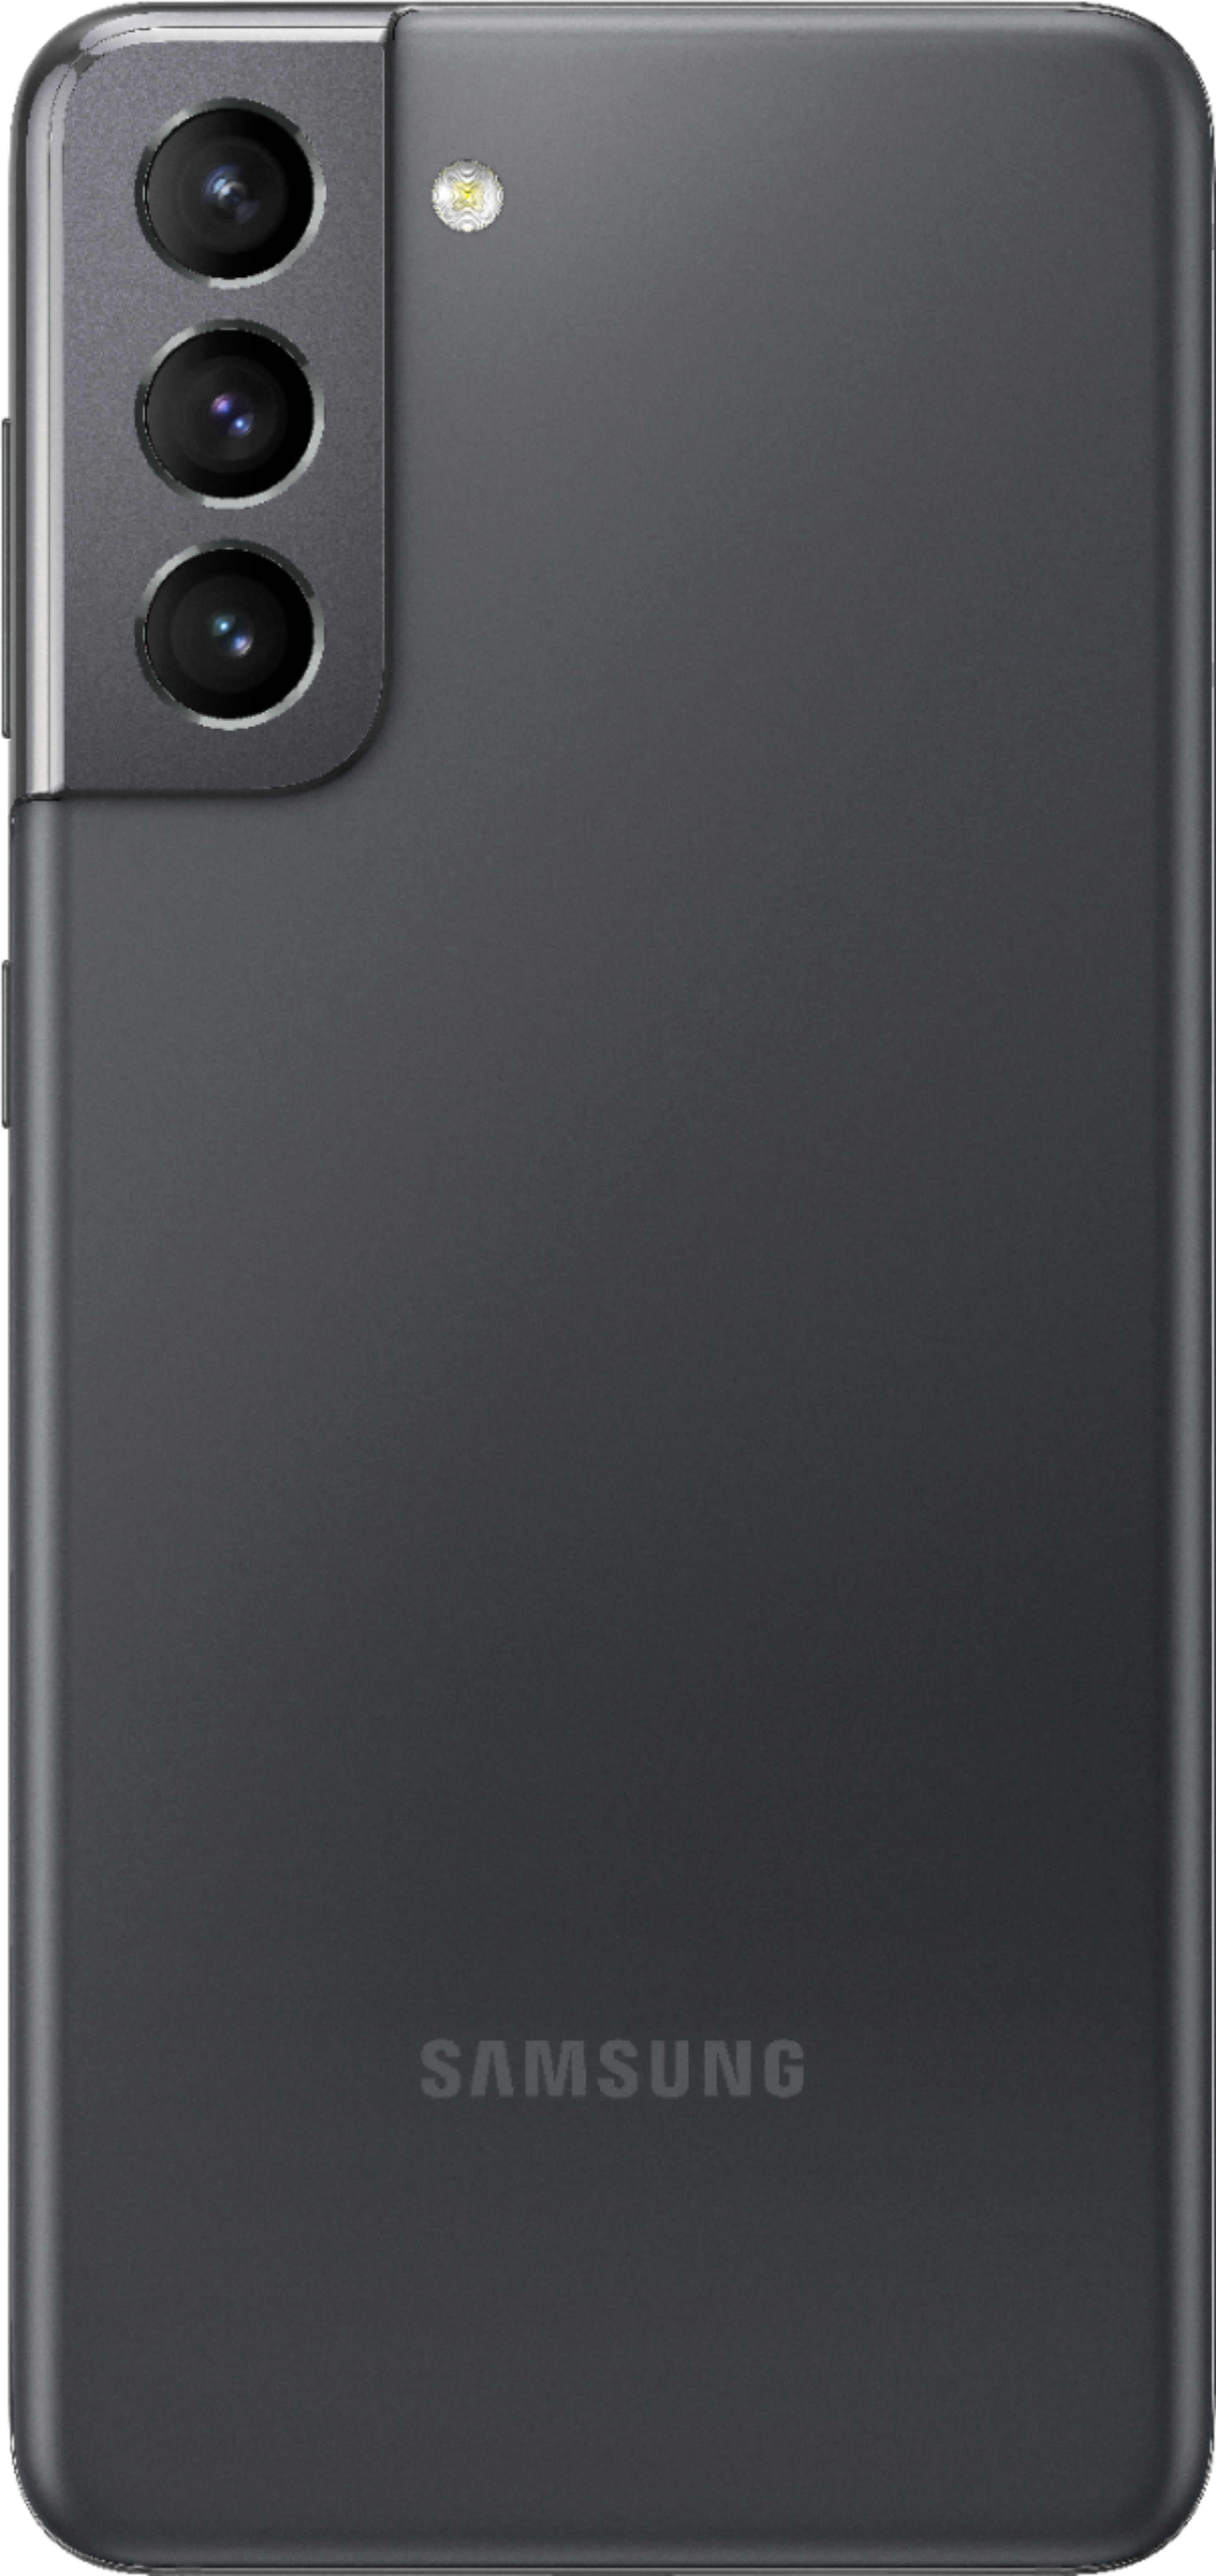 Samsung Galaxy S21 Ultra 5G 256GB (Unlocked) SM-G998UZKEXAA - Best Buy